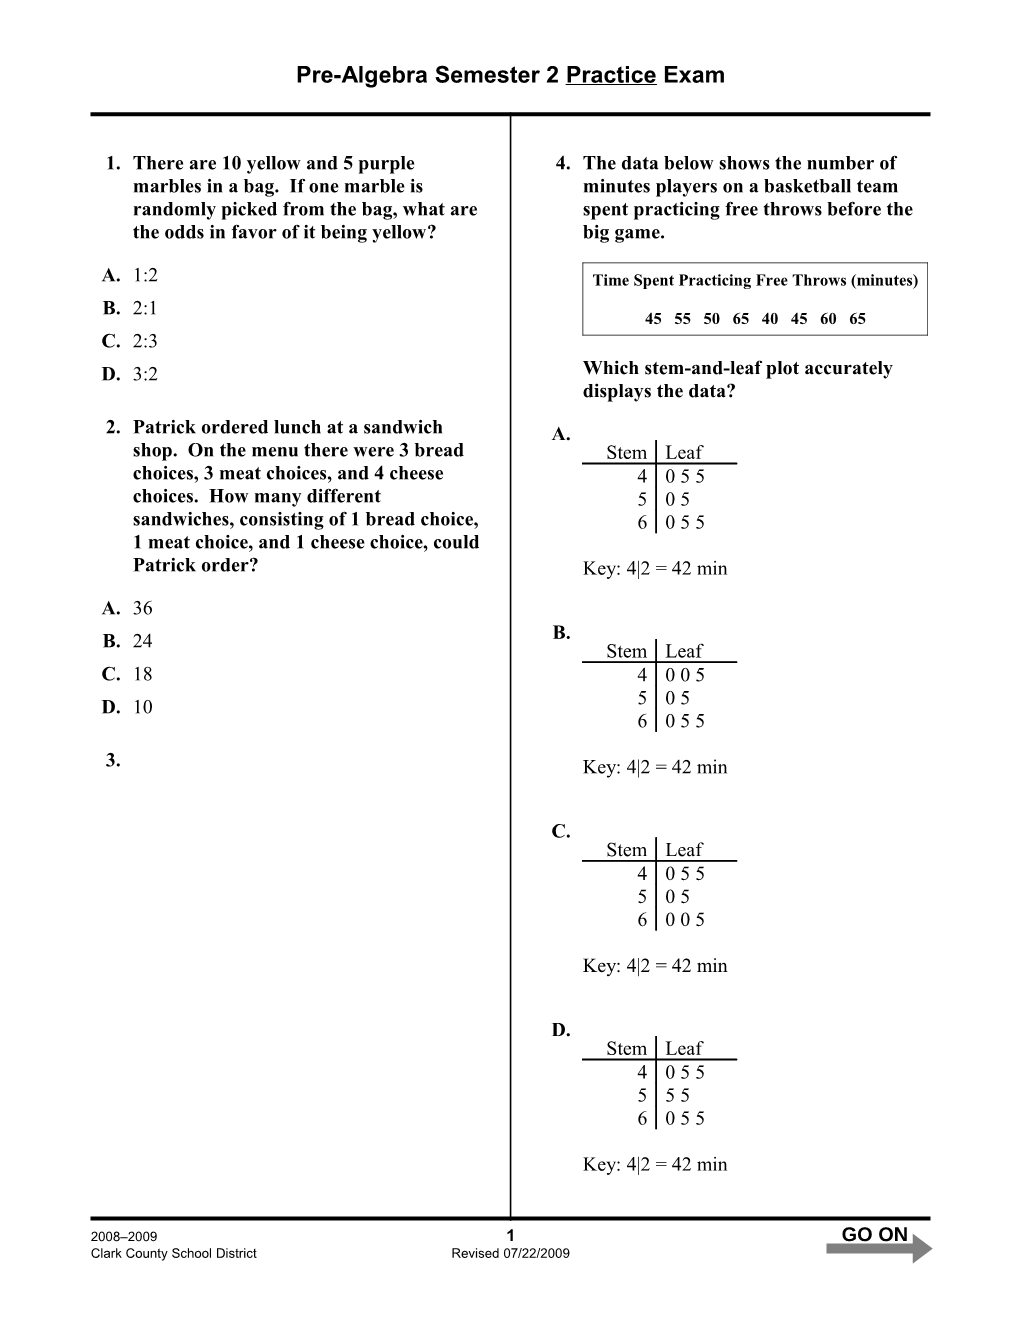 Pre-Algebrasemester 2Practice Exam